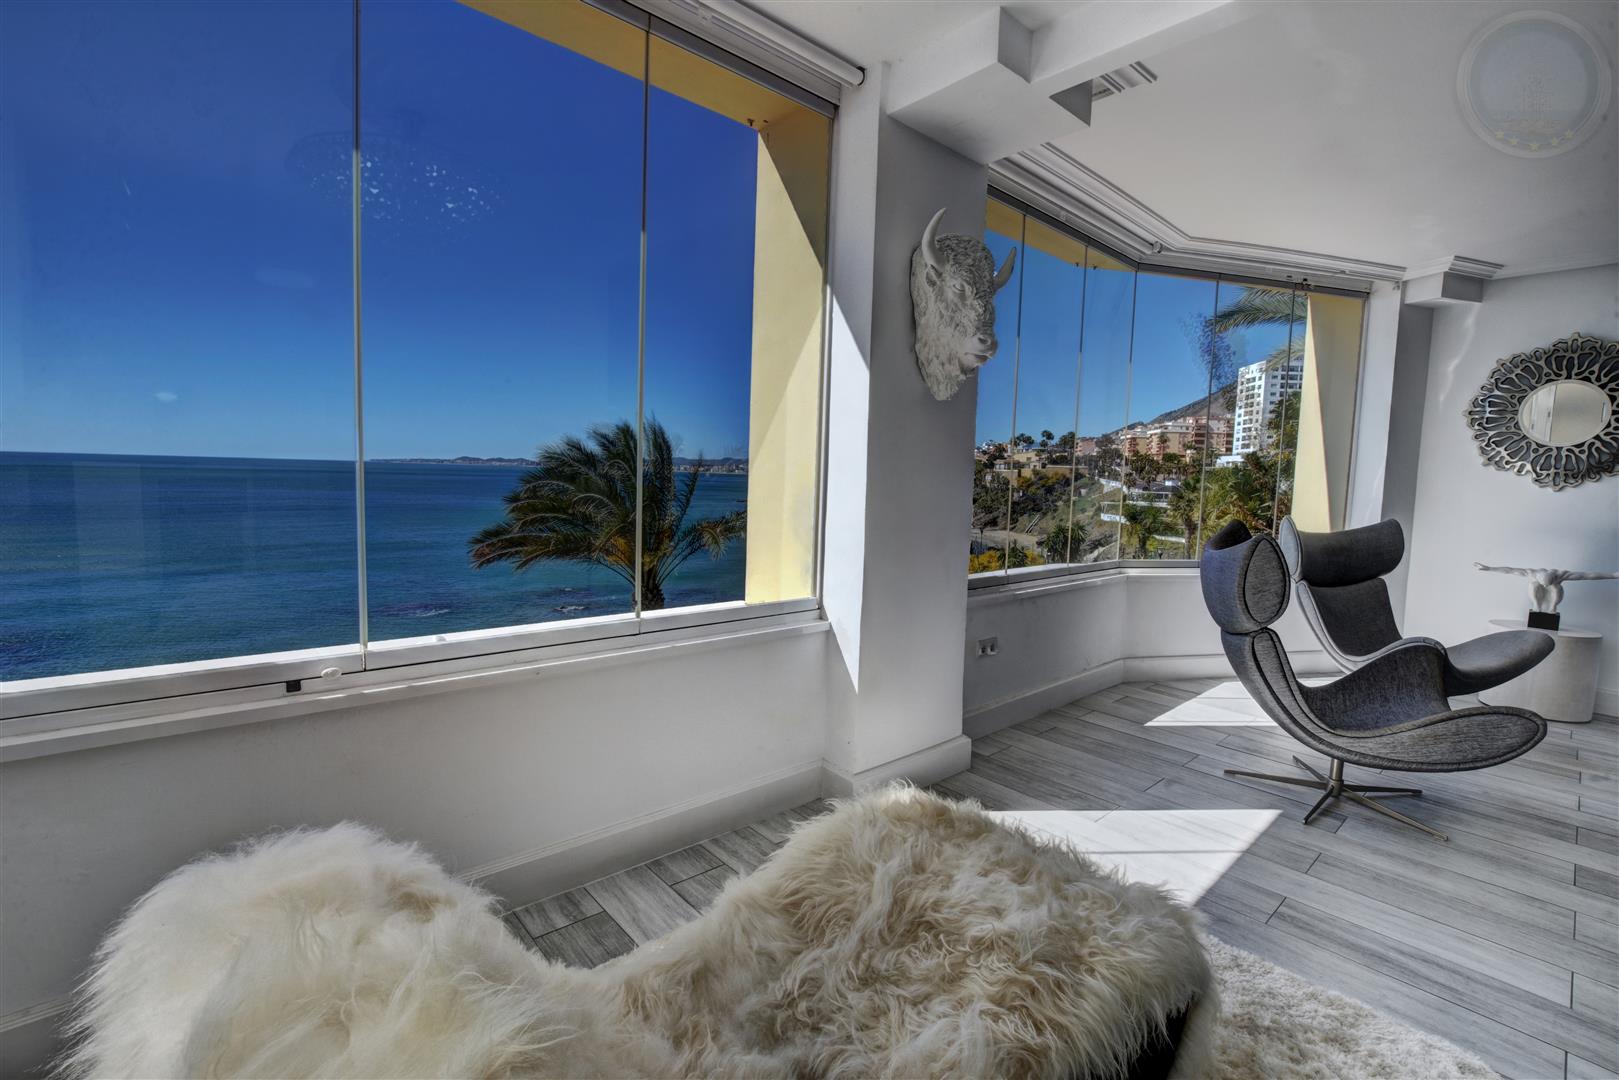 Beachfront luxury apartment for sale in Tres caravelas Benalmadena Costa